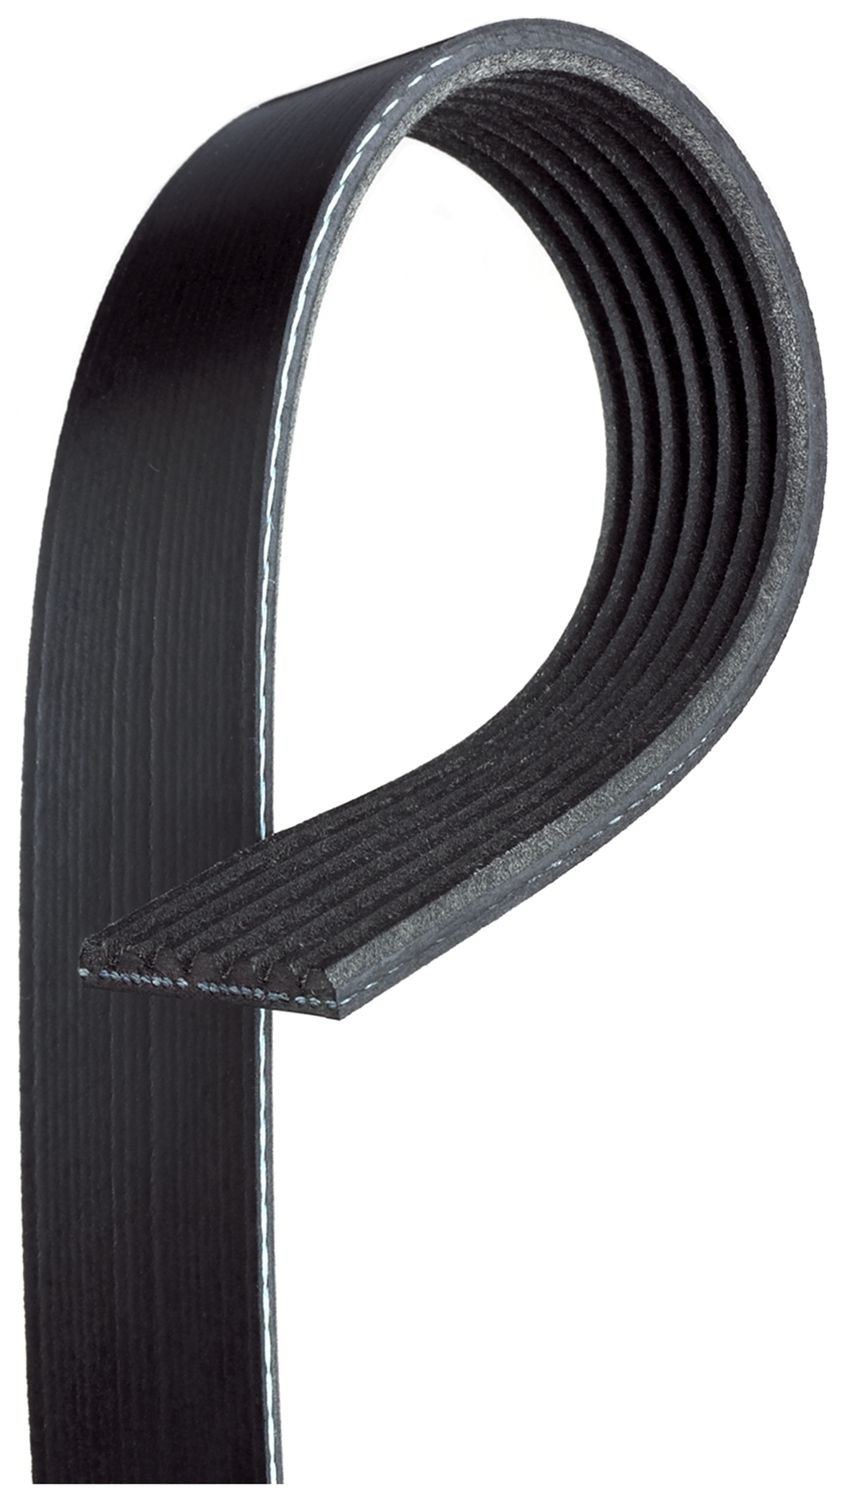 GATES 7PK1735 Serpentine belt 1735mm, 7, G-Force™ C12™ CVT Belt